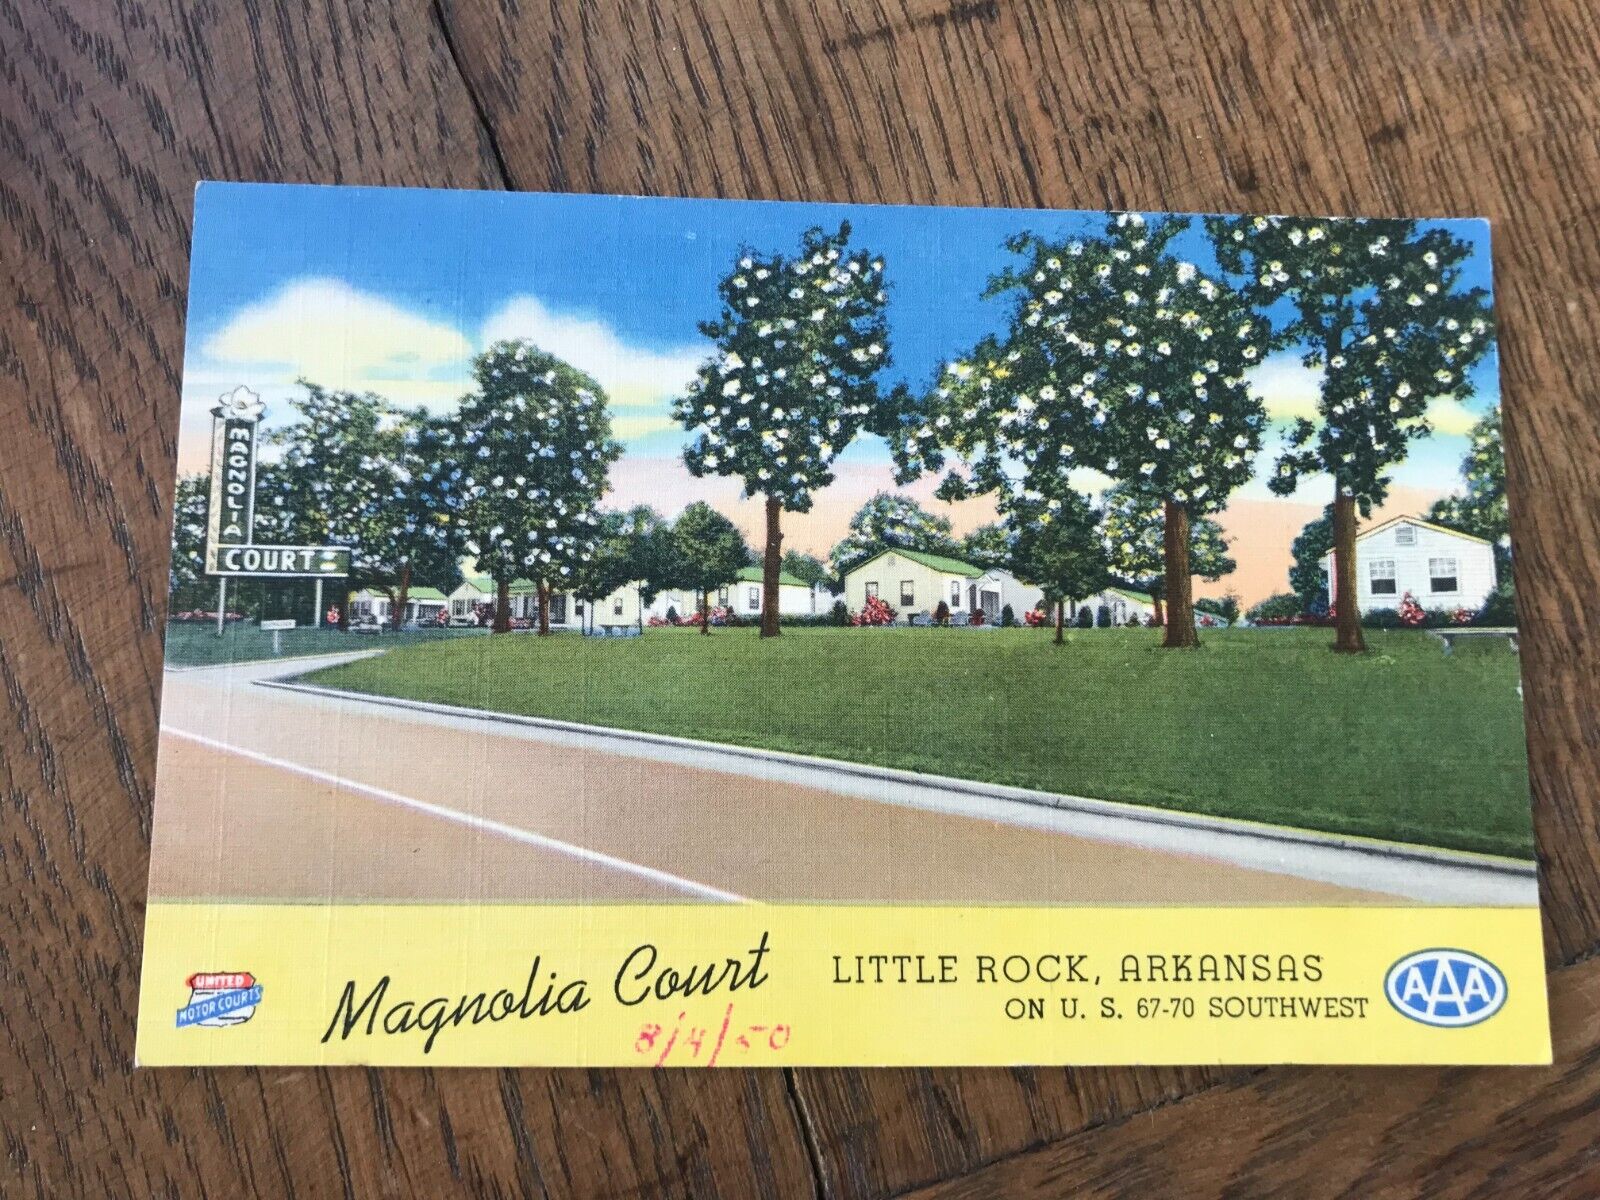 Magnolia Court Little Rock Arkansas Postcard